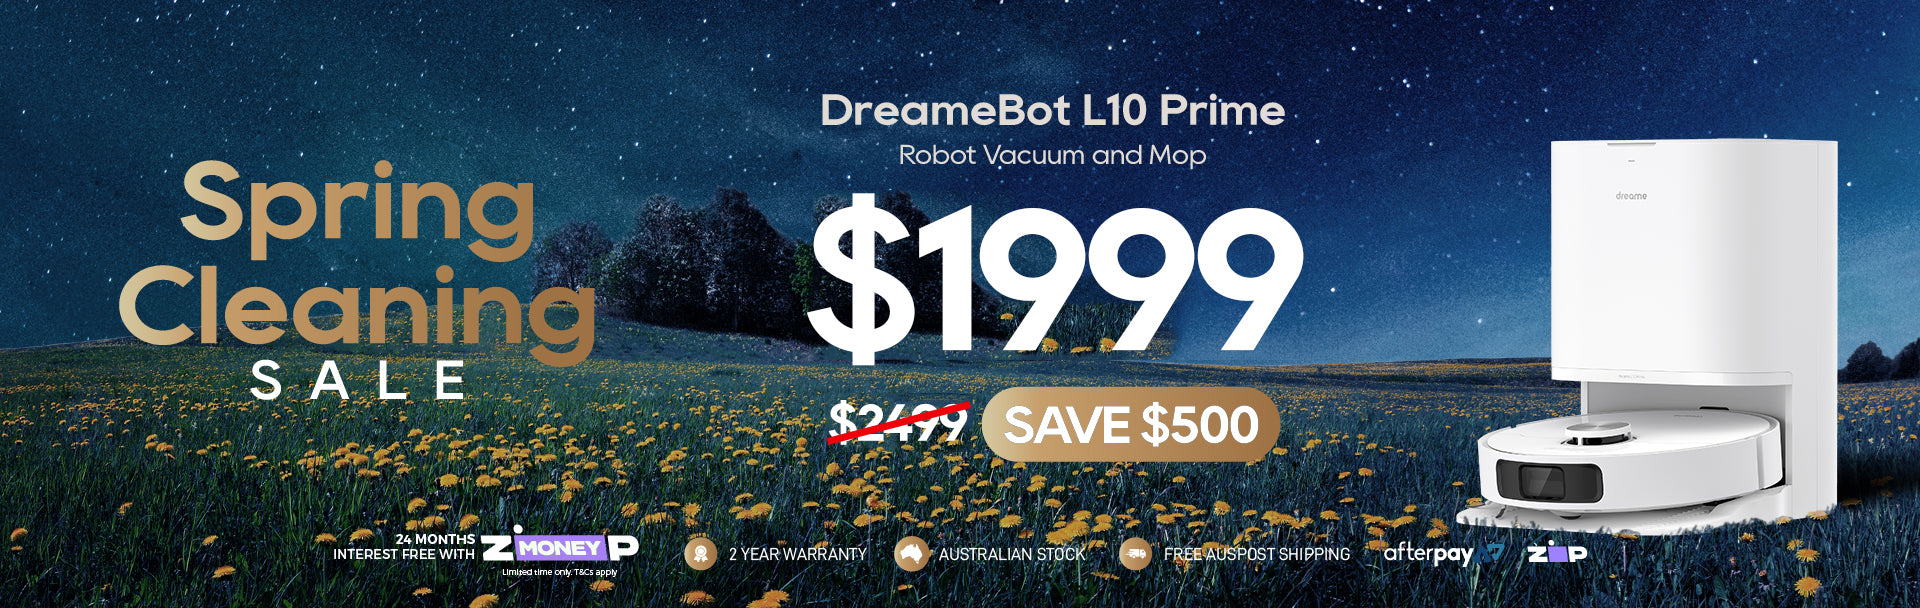 DreameBot L10 Prime 